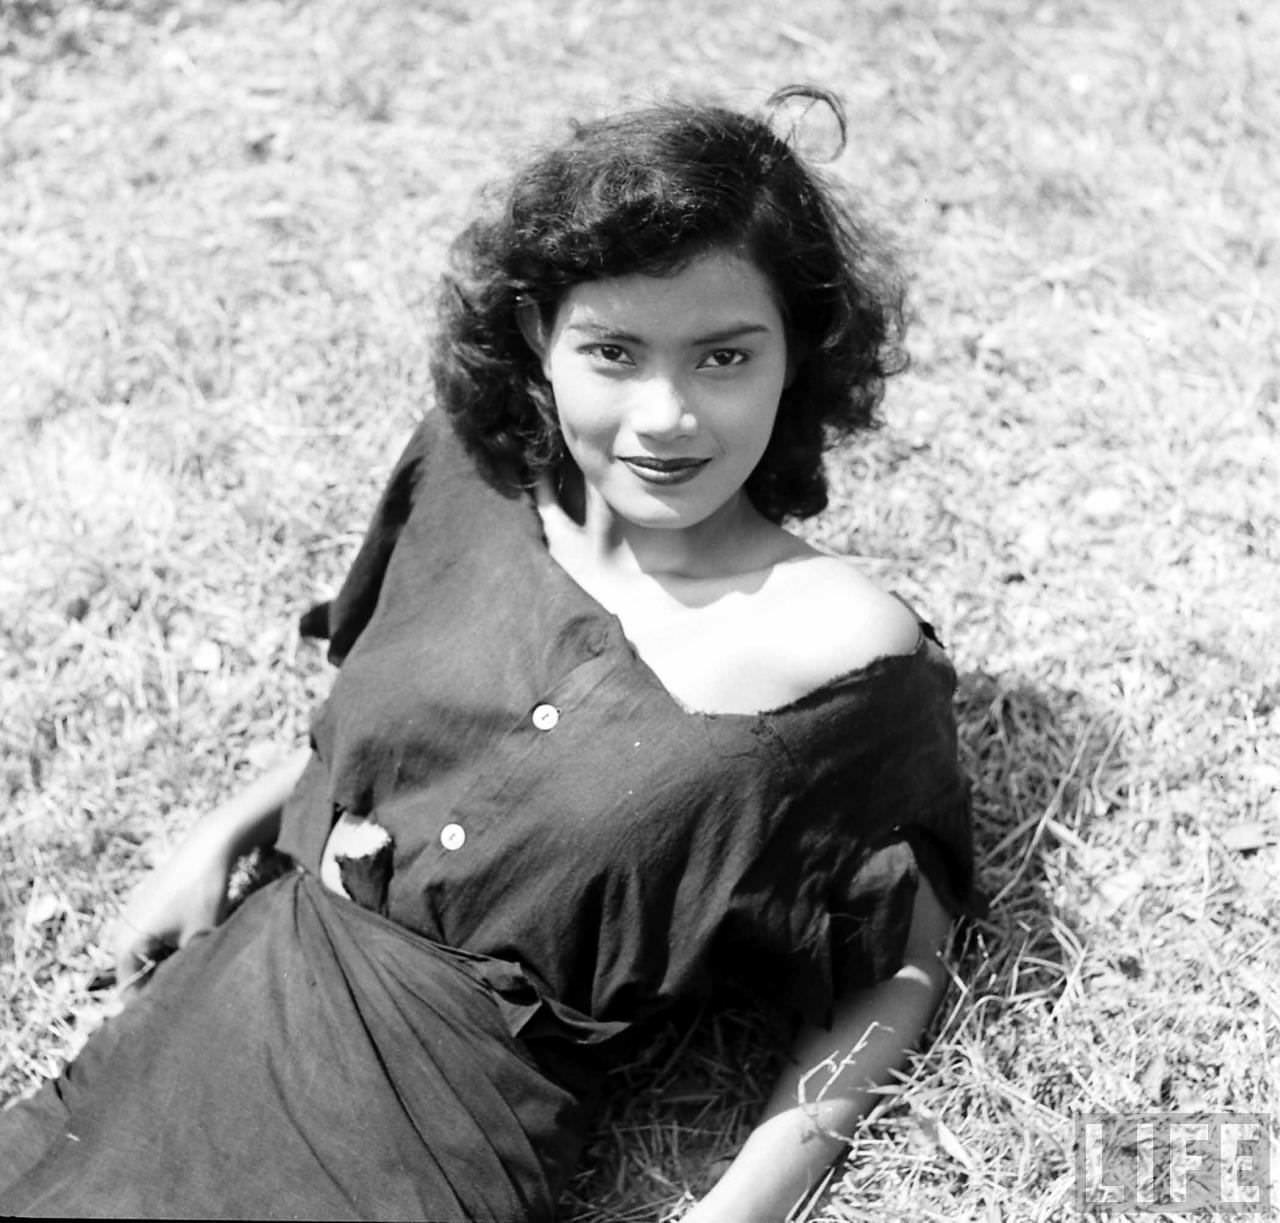 Stunning Portraits of a Beautiful Bangkok Girl in the Garden, 1950s